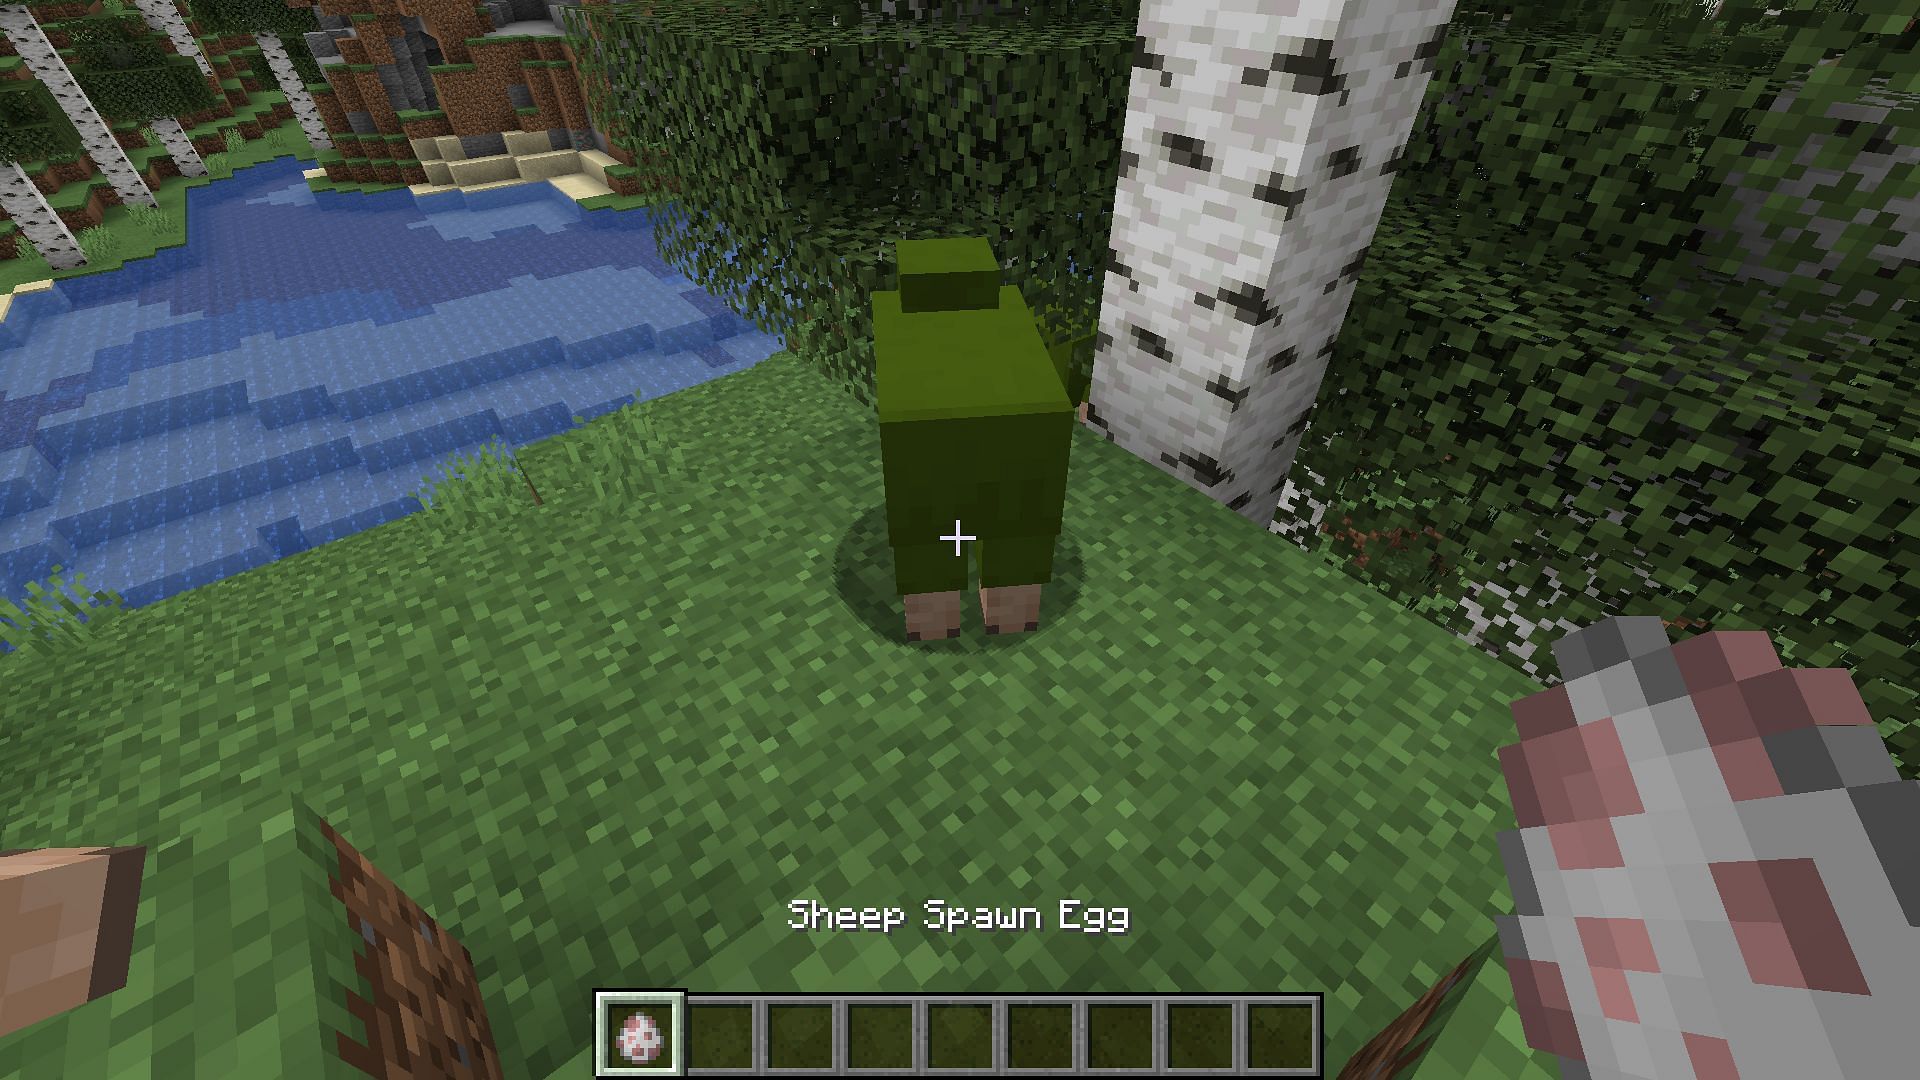 Sheep spawn color has been changed to green (Image via Mojang)